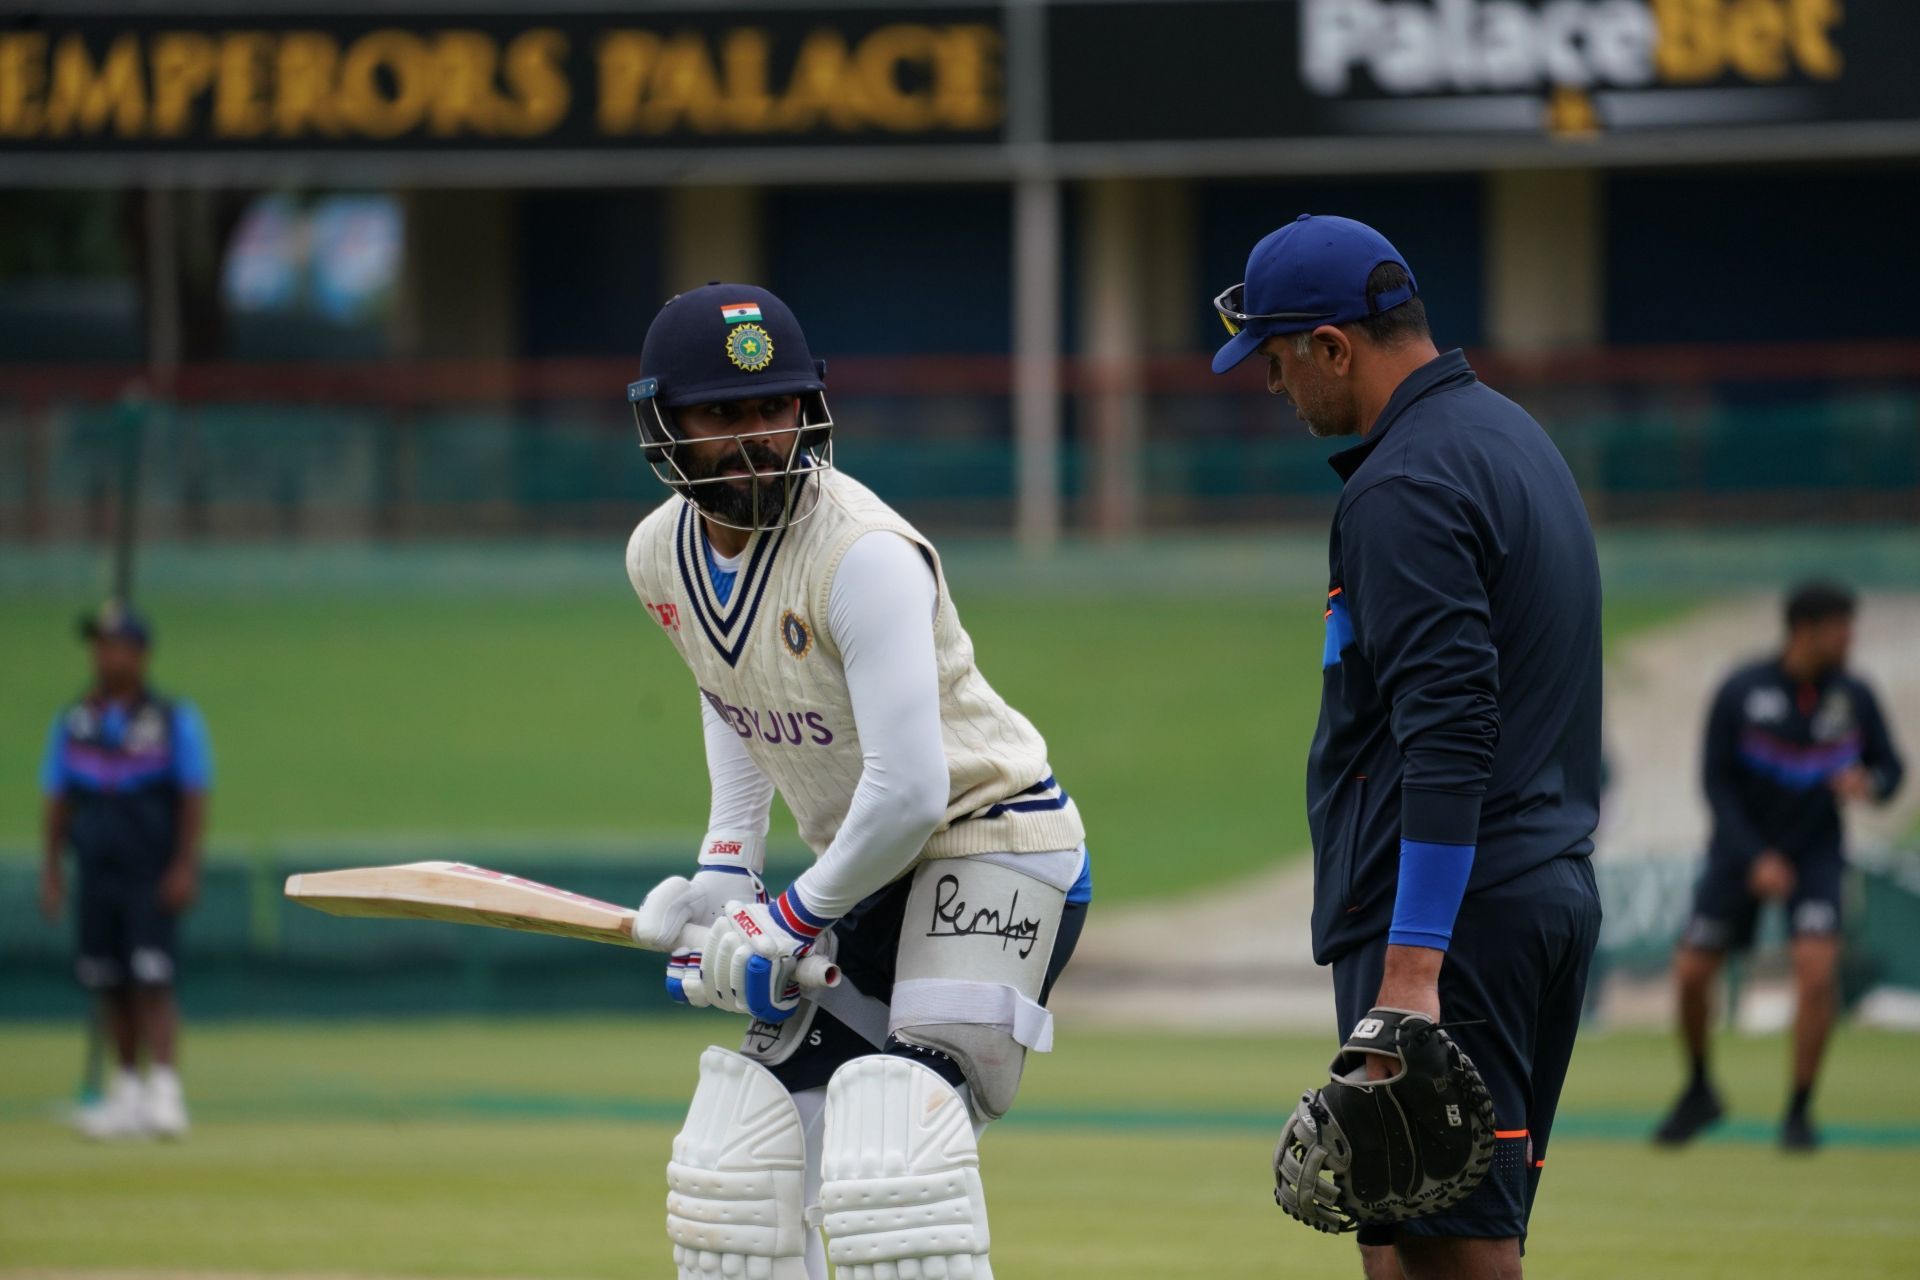 India head coach Rahul Dravid giving his batting inputs to skipper Virat Kohli